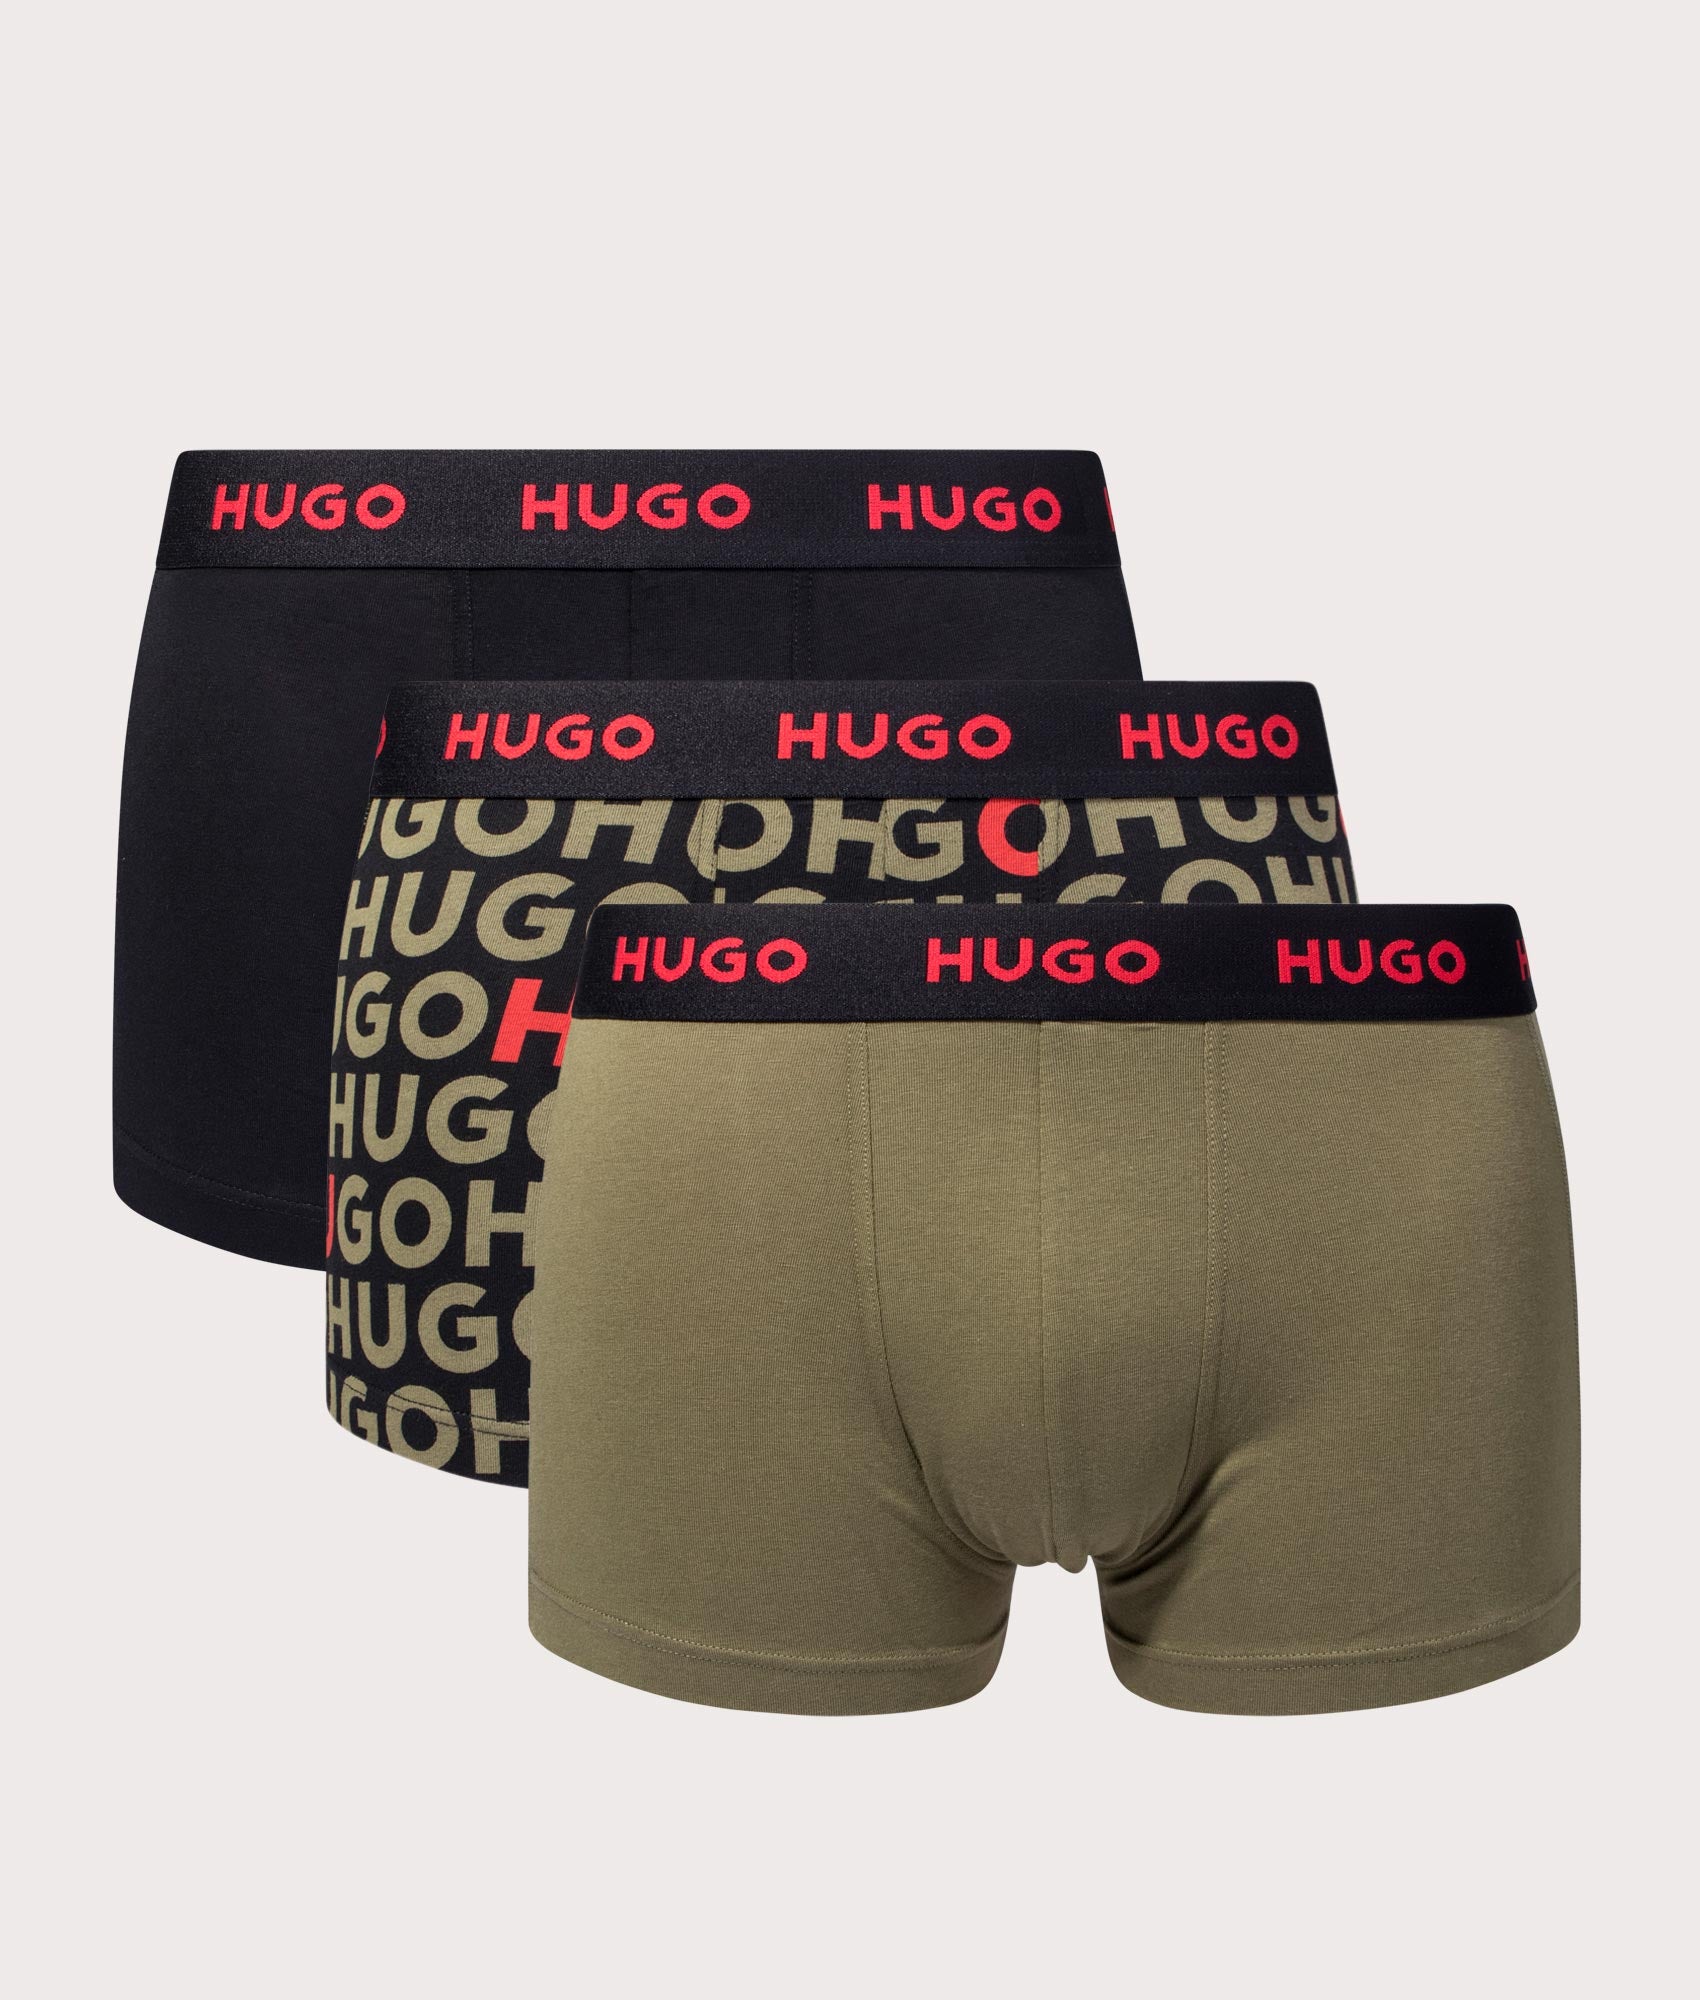 HUGO Mens Three Pack Triplet Design Trunks - Colour: 311 Medium Green - Size: Small